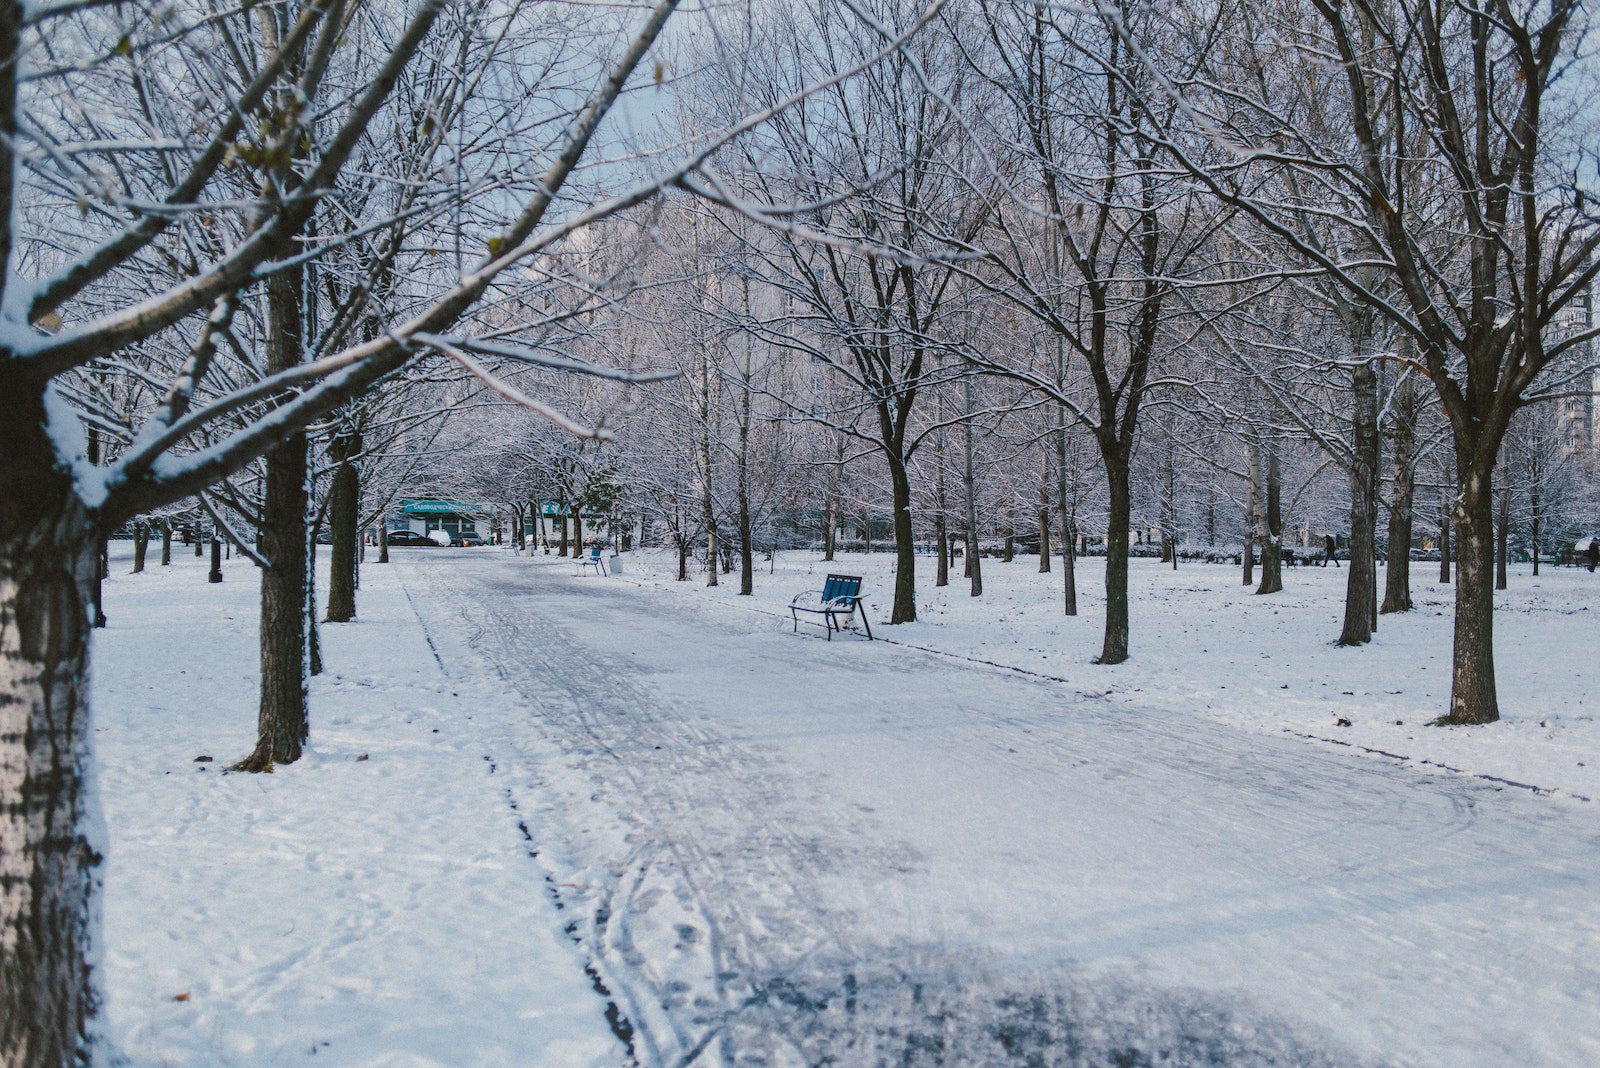 Walkway between dry trees in winter park